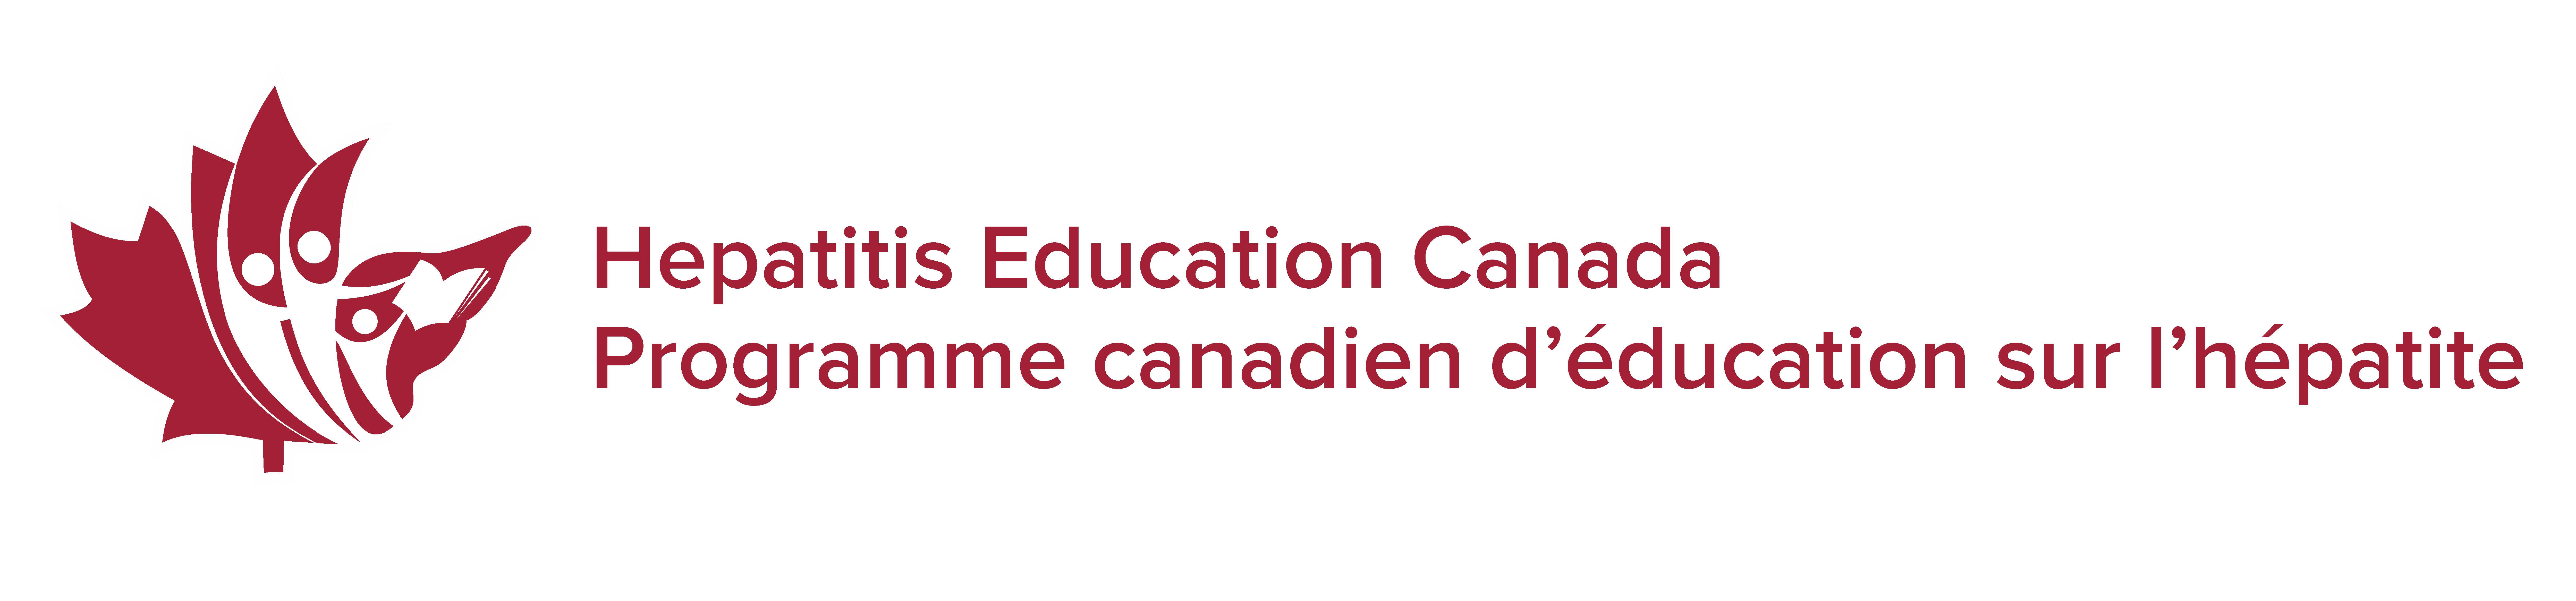 Hepatitis Education Canada logo